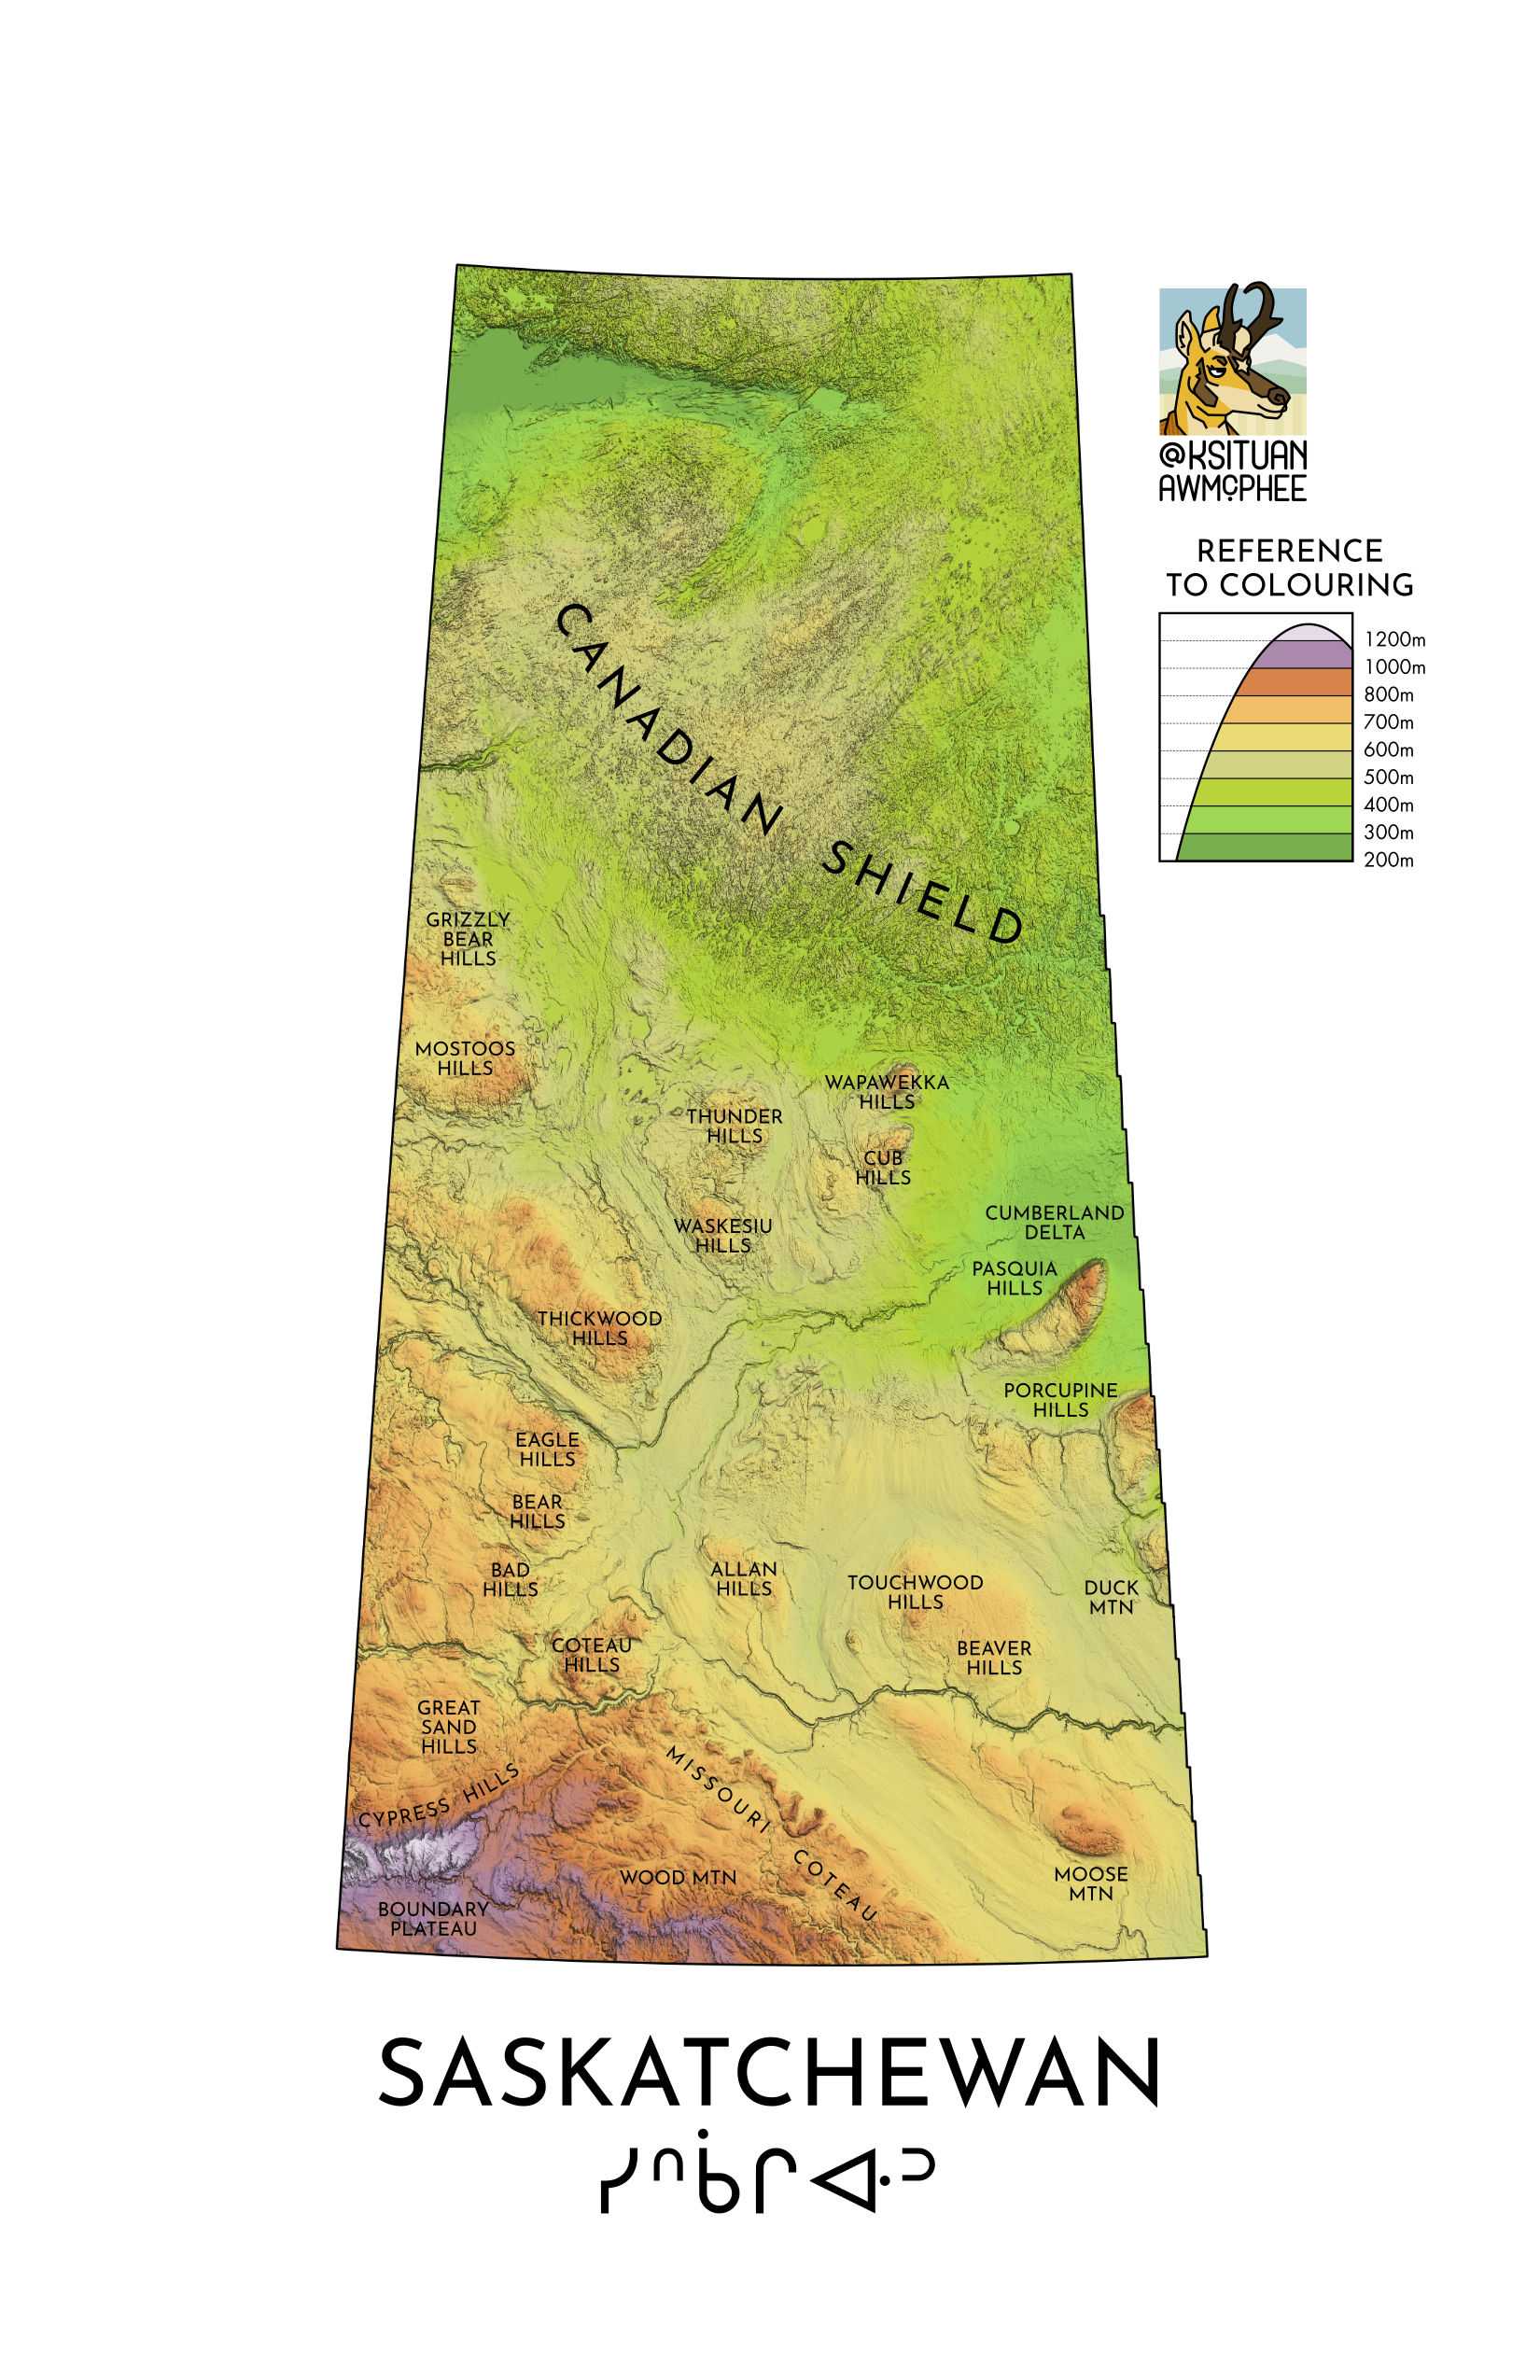 A map of landforms and elevation in Saskatchewan.